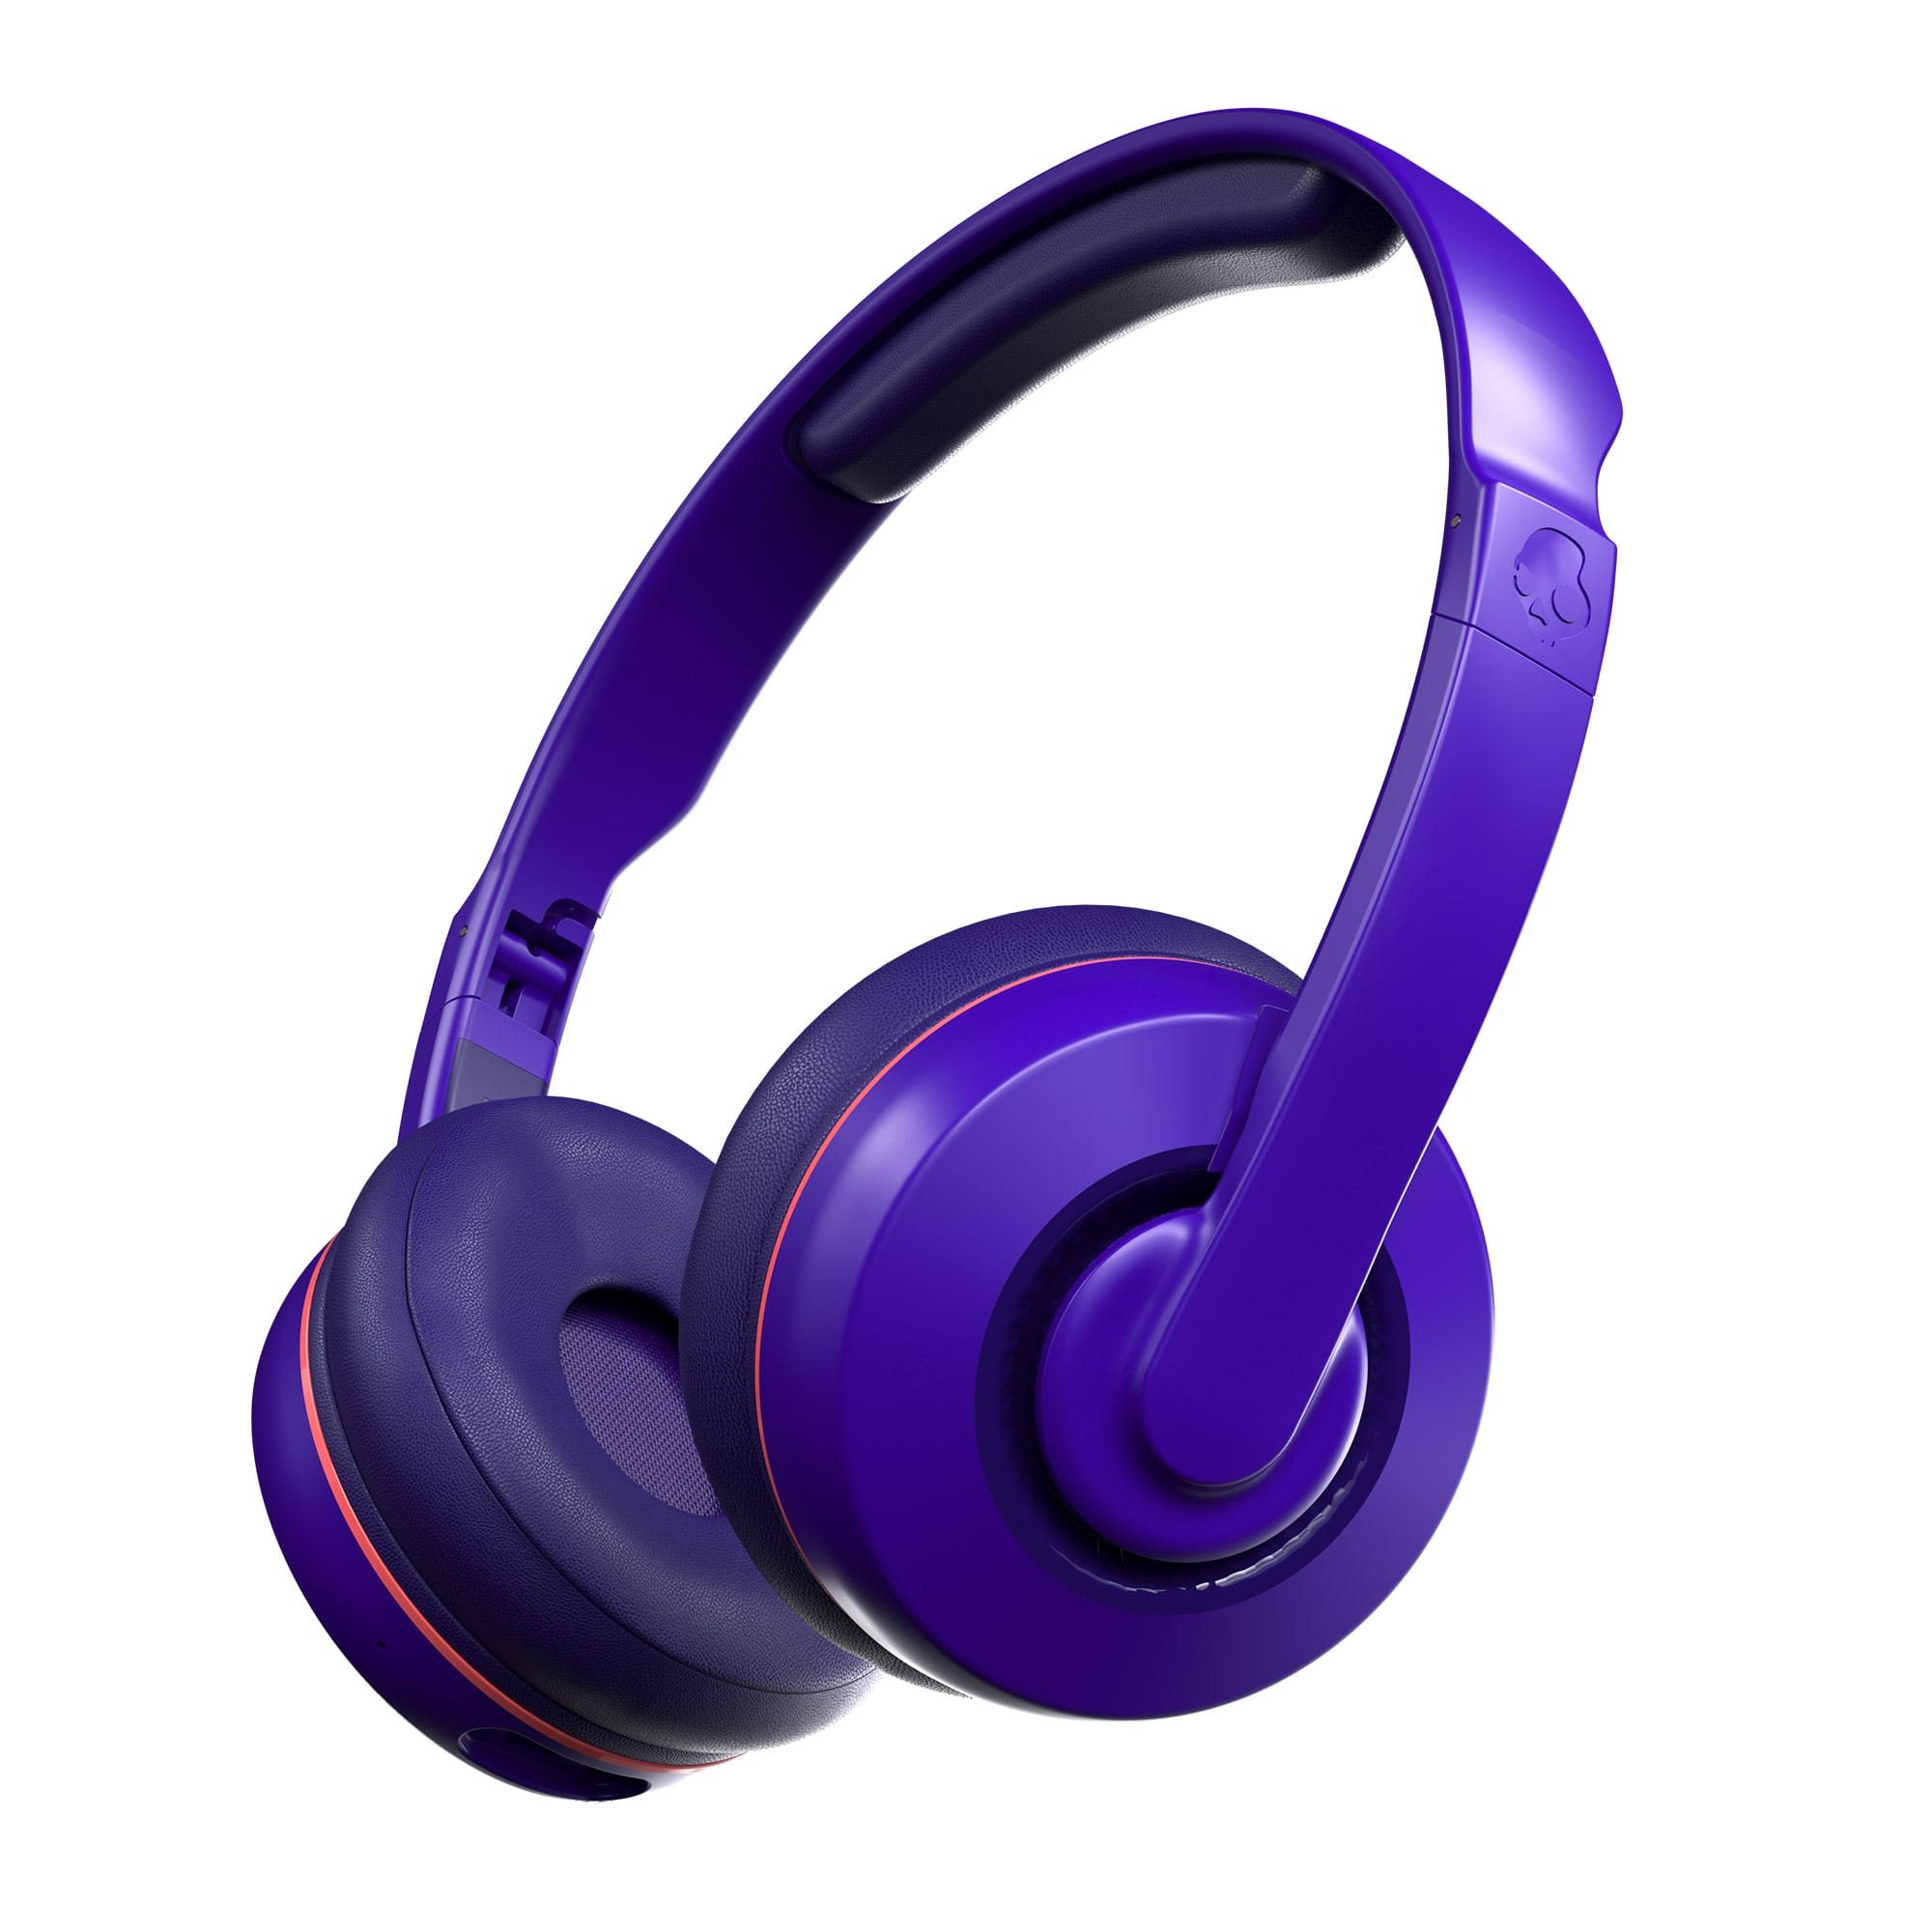 Skullcandy Cassette Wireless On-Ear Headphone - Retro Purple for $29